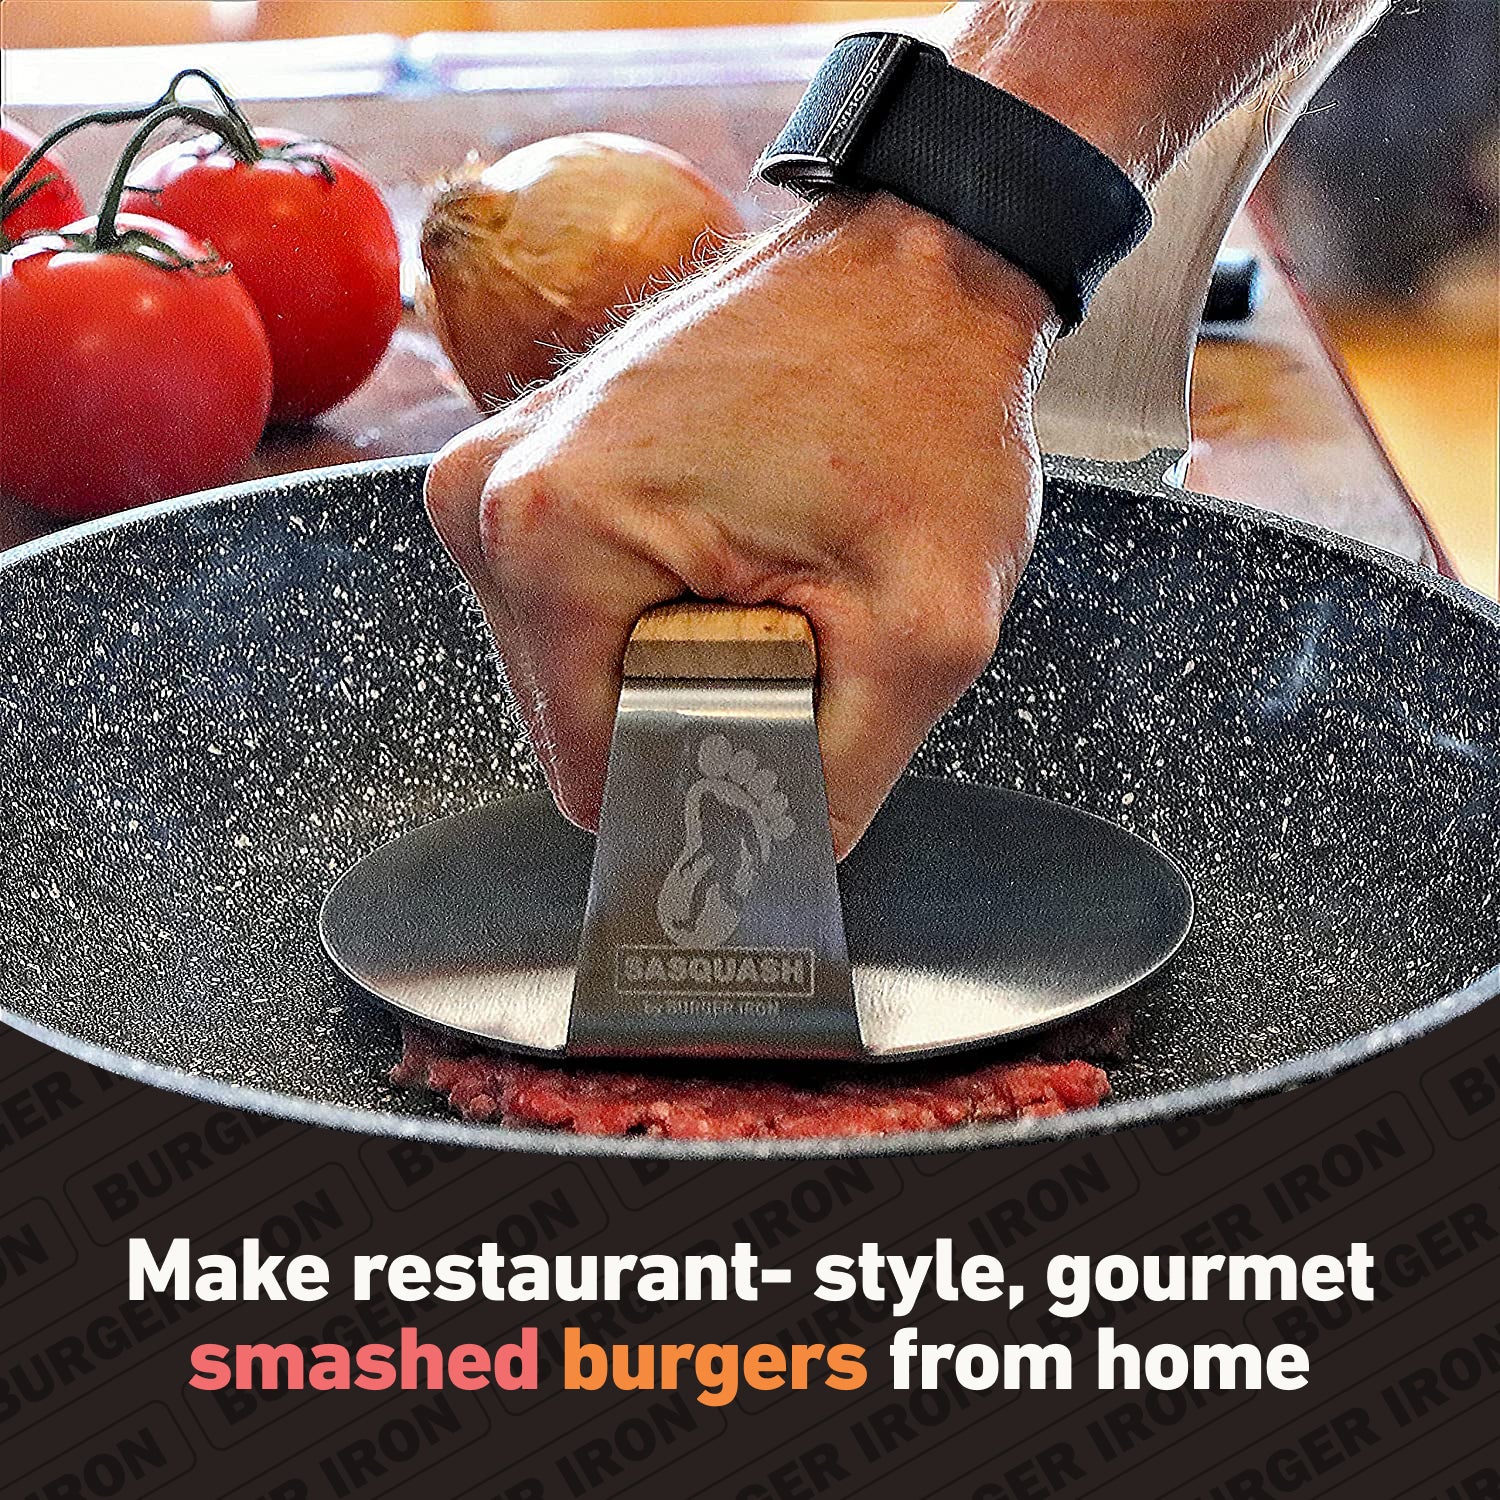 Prensa de hamburguesas prensa de barbacoa Wurst Burger Smasher